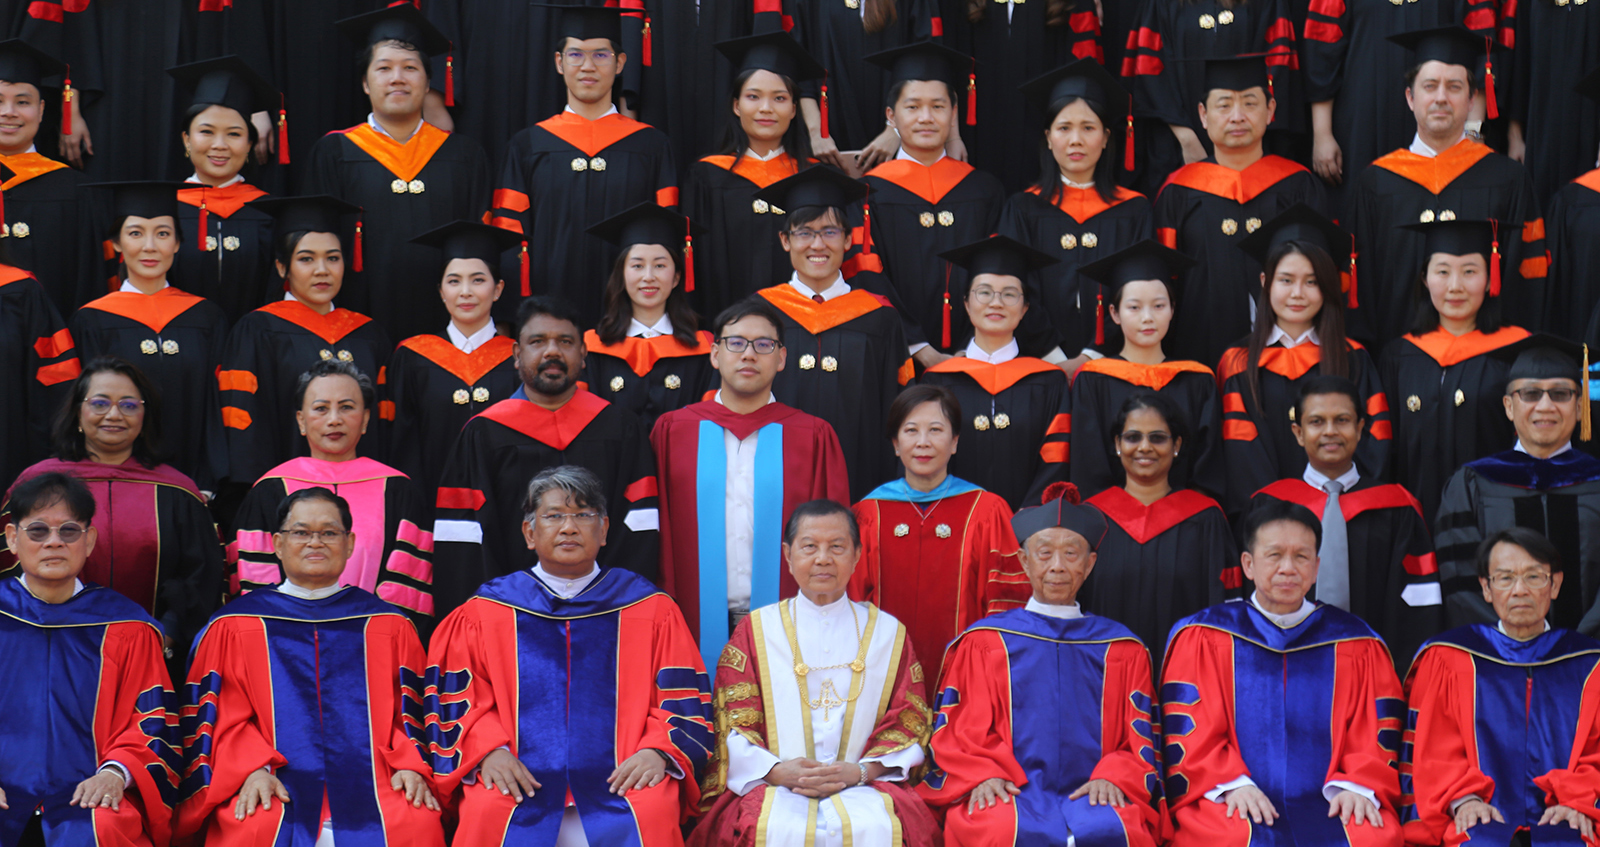 Our Heart-Felt Congratulations to all Dearest Graduates